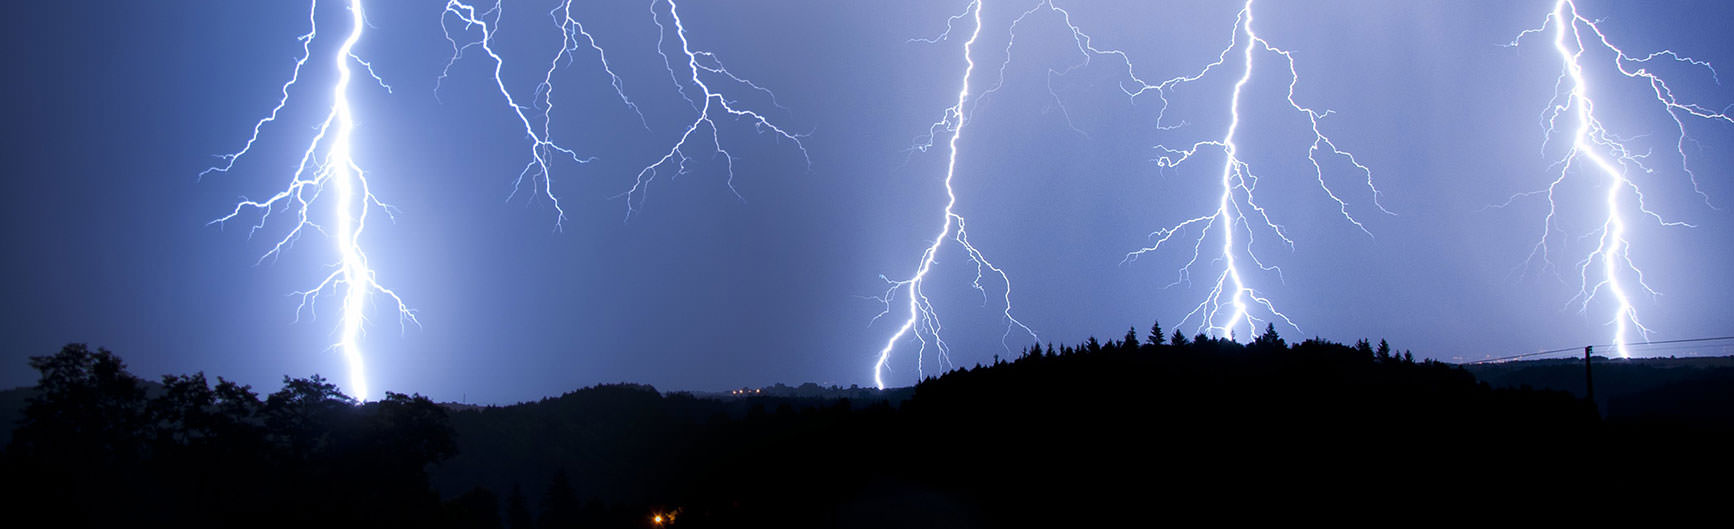 Thunderstorm Safety – Avoiding a Lightning Strike